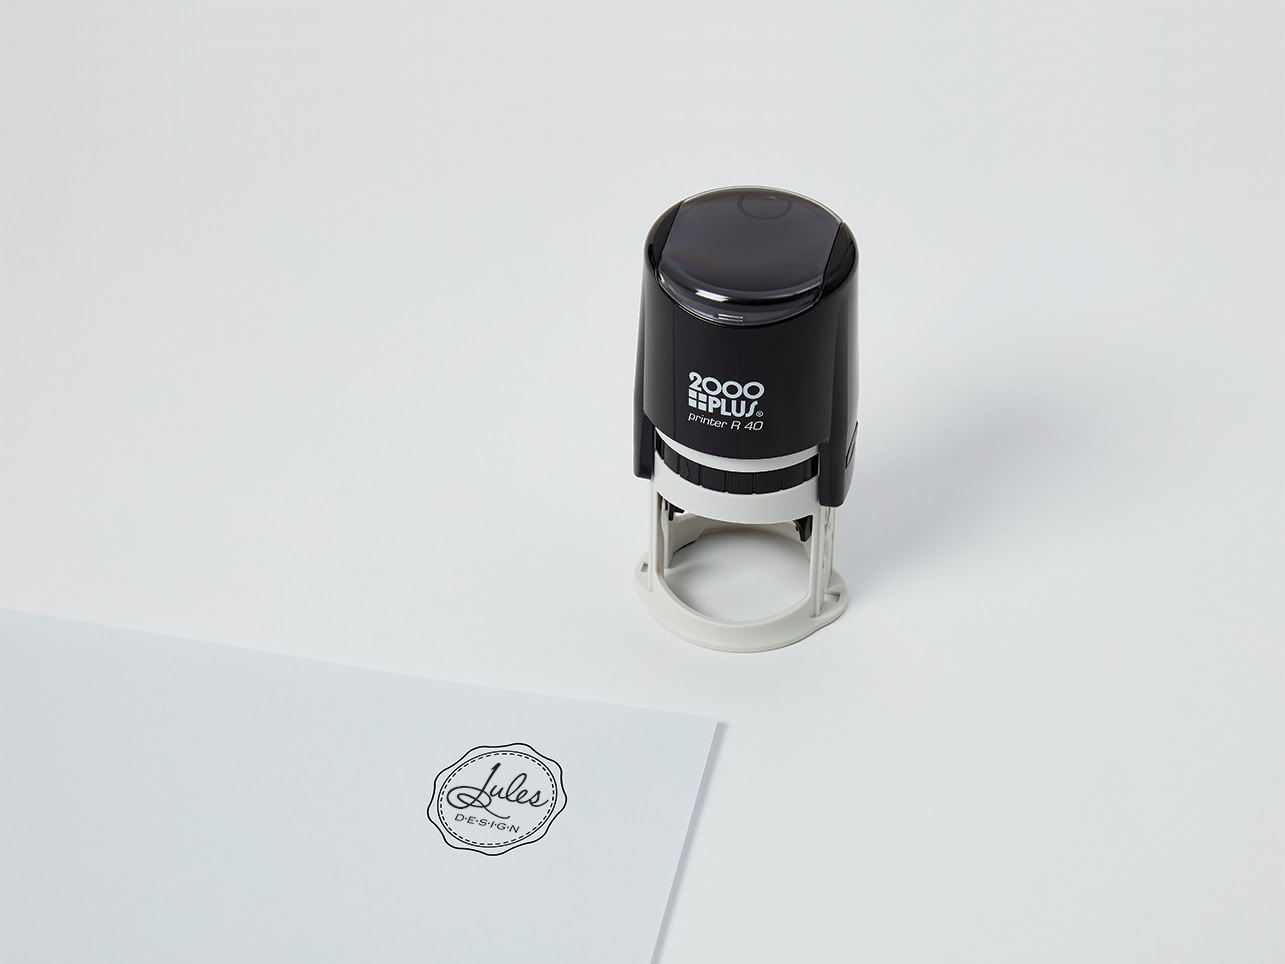 Shiny O-3555 Self Inking Oval Rubber Custom Logo Stamp Shiny Office  Stationery 35 x 55mm 